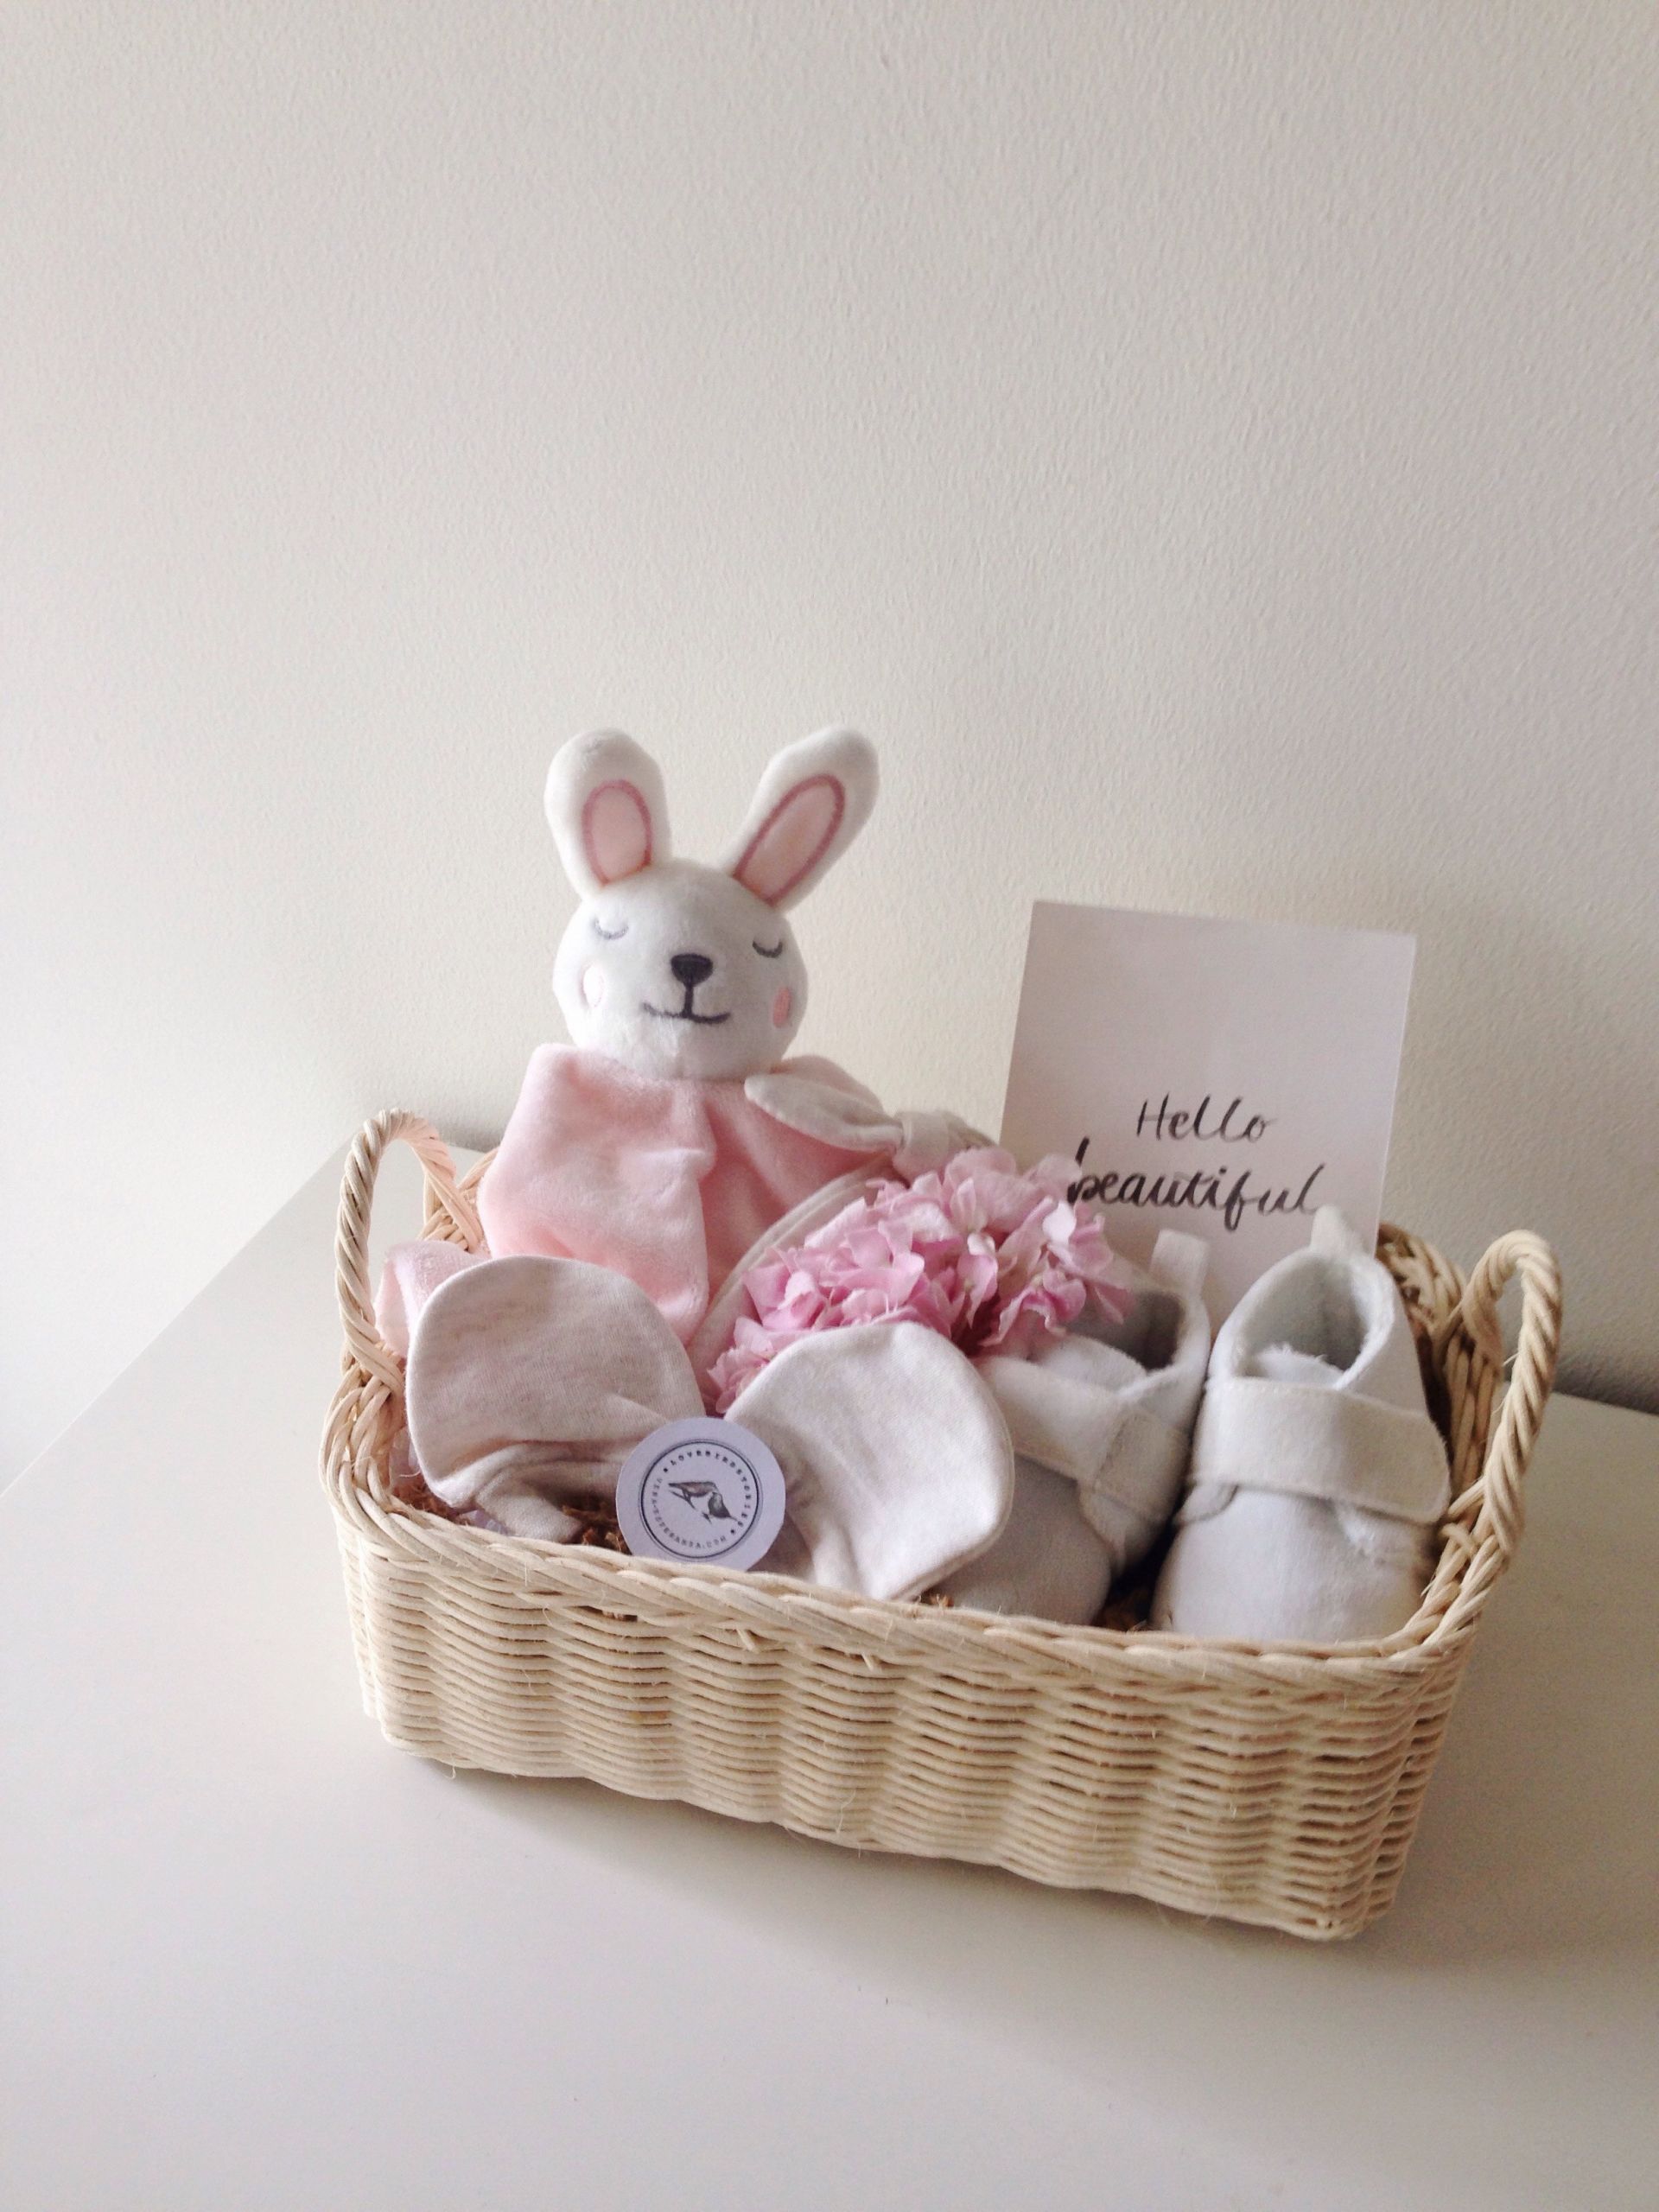 Newborn Baby Gift Baskets Ideas
 Wel e Baby Gifts Ideas vena esperanza